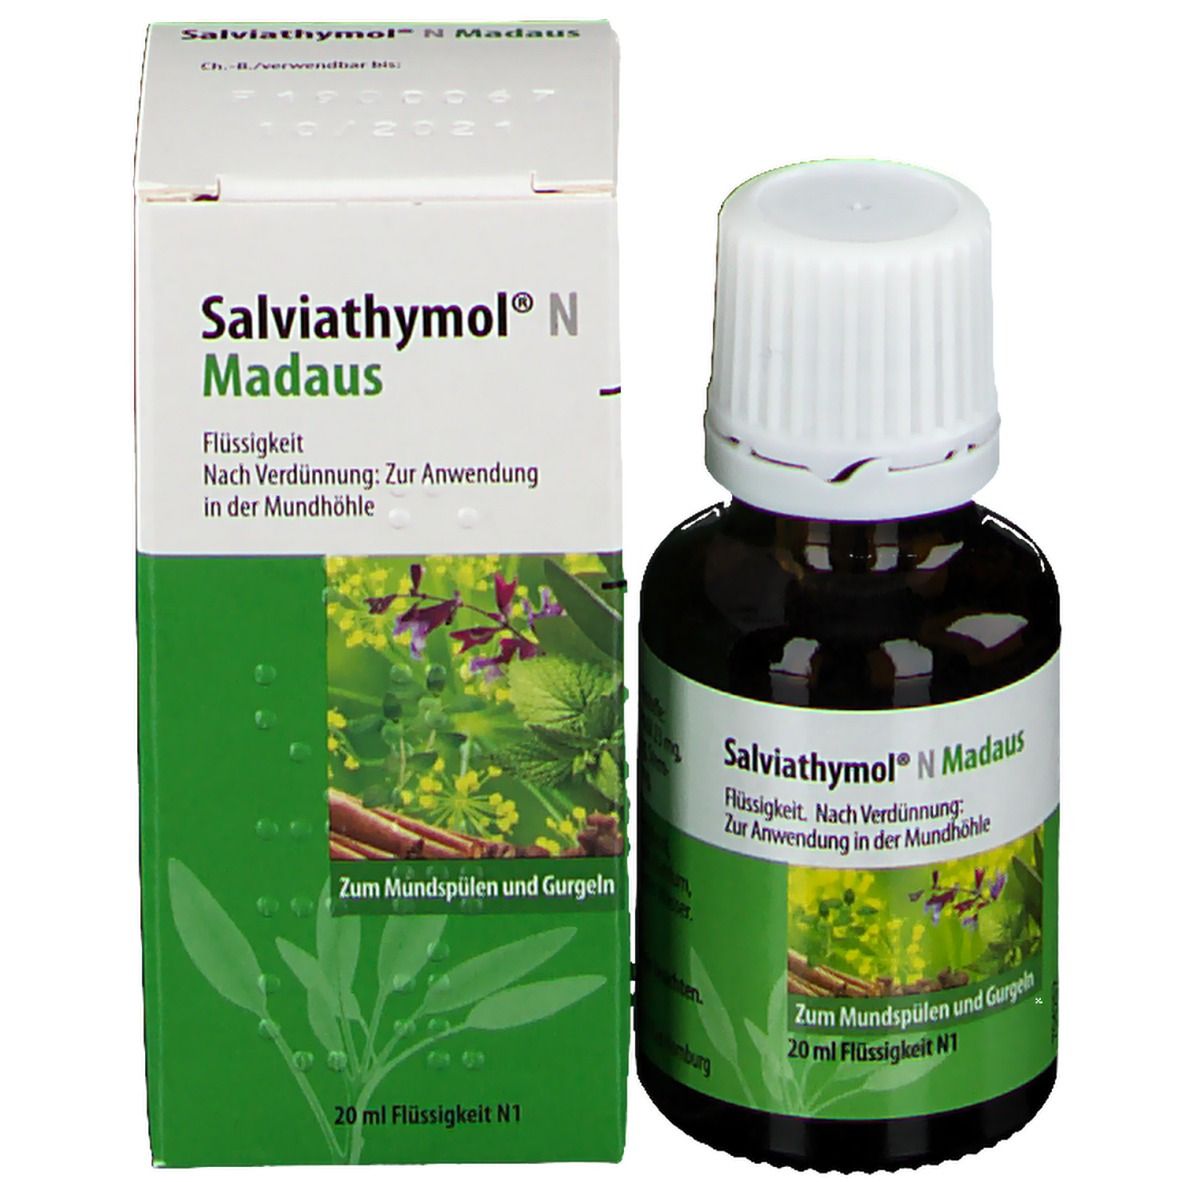 Salviathymol N® Madaus